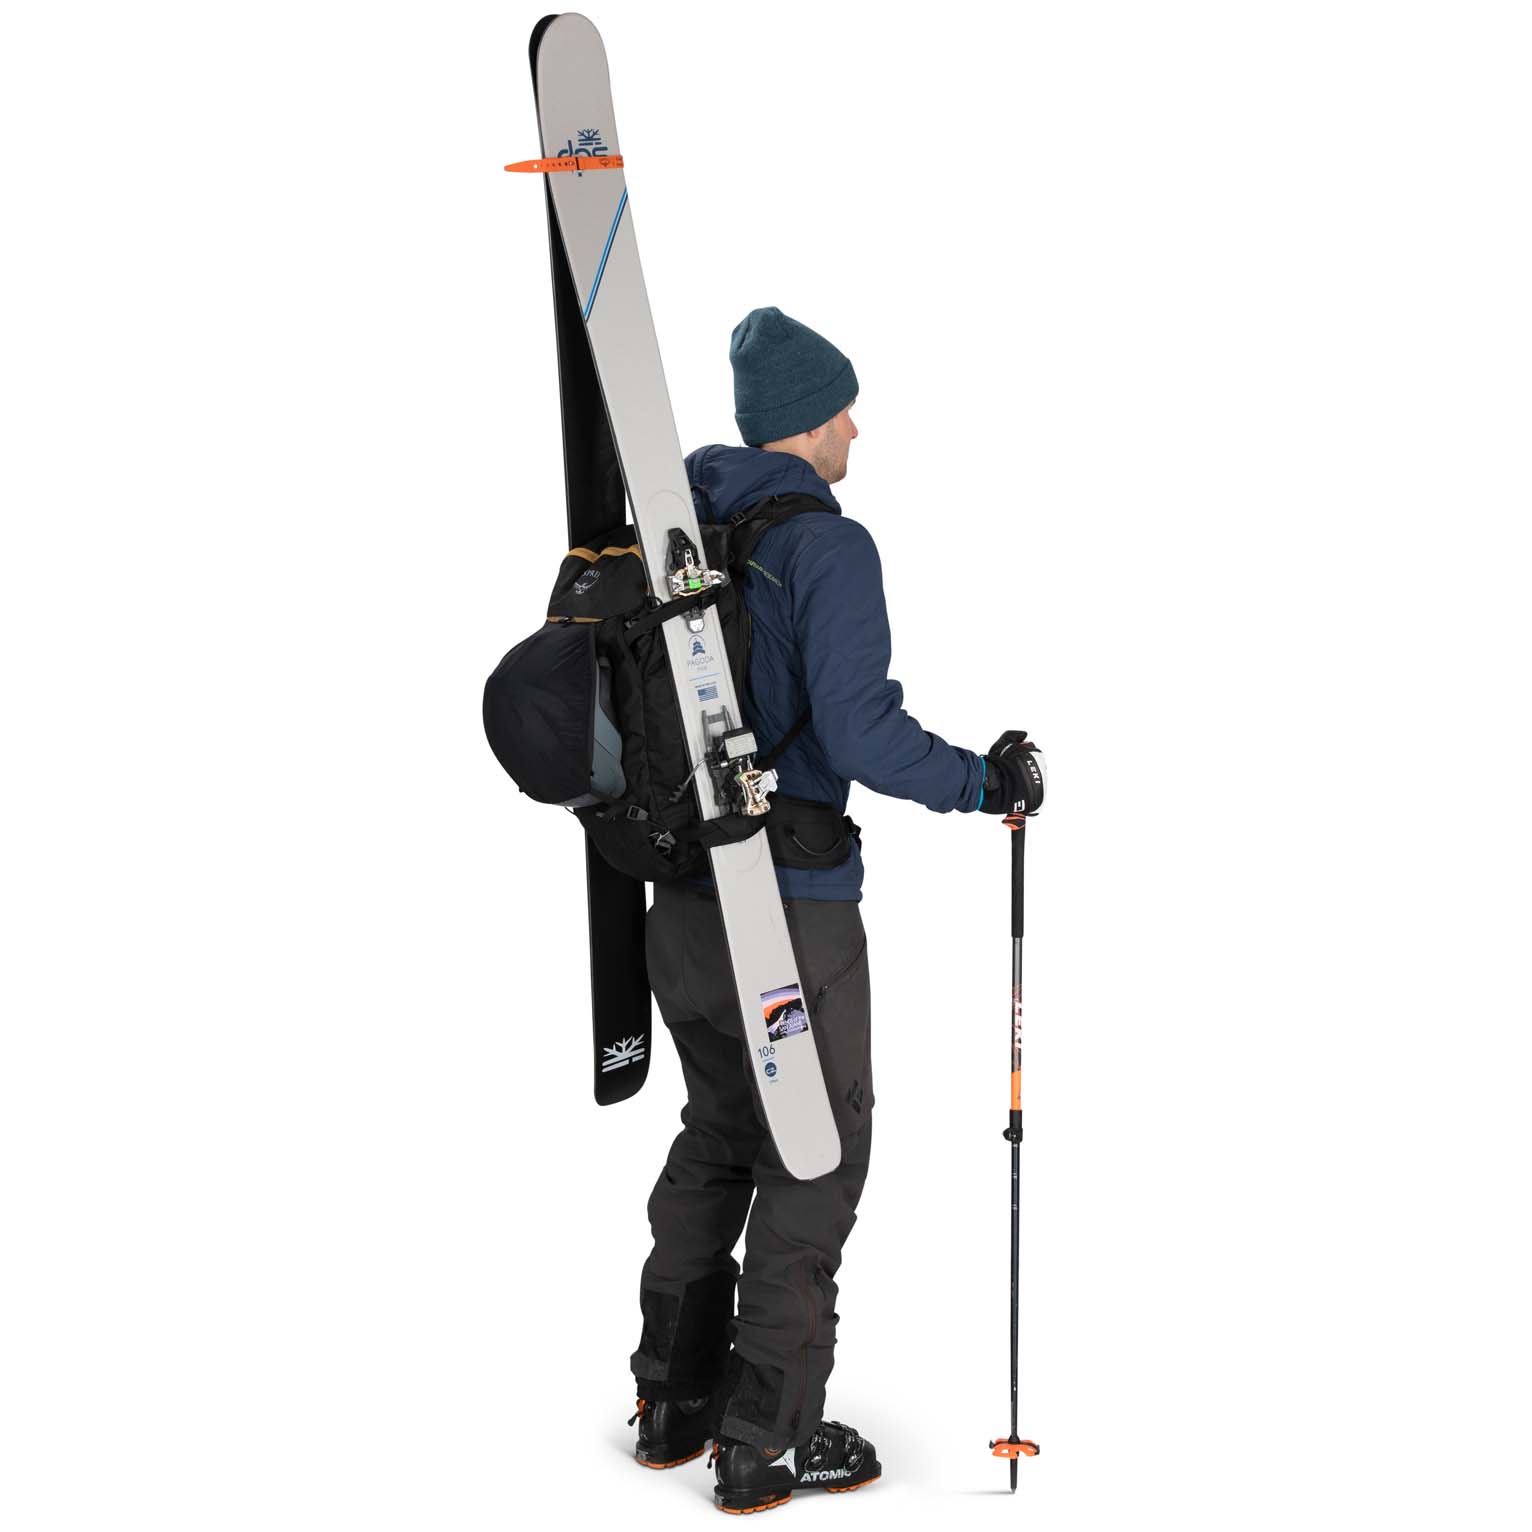 Osprey Soelden 32 Technical Ski/Snowboard Backpack